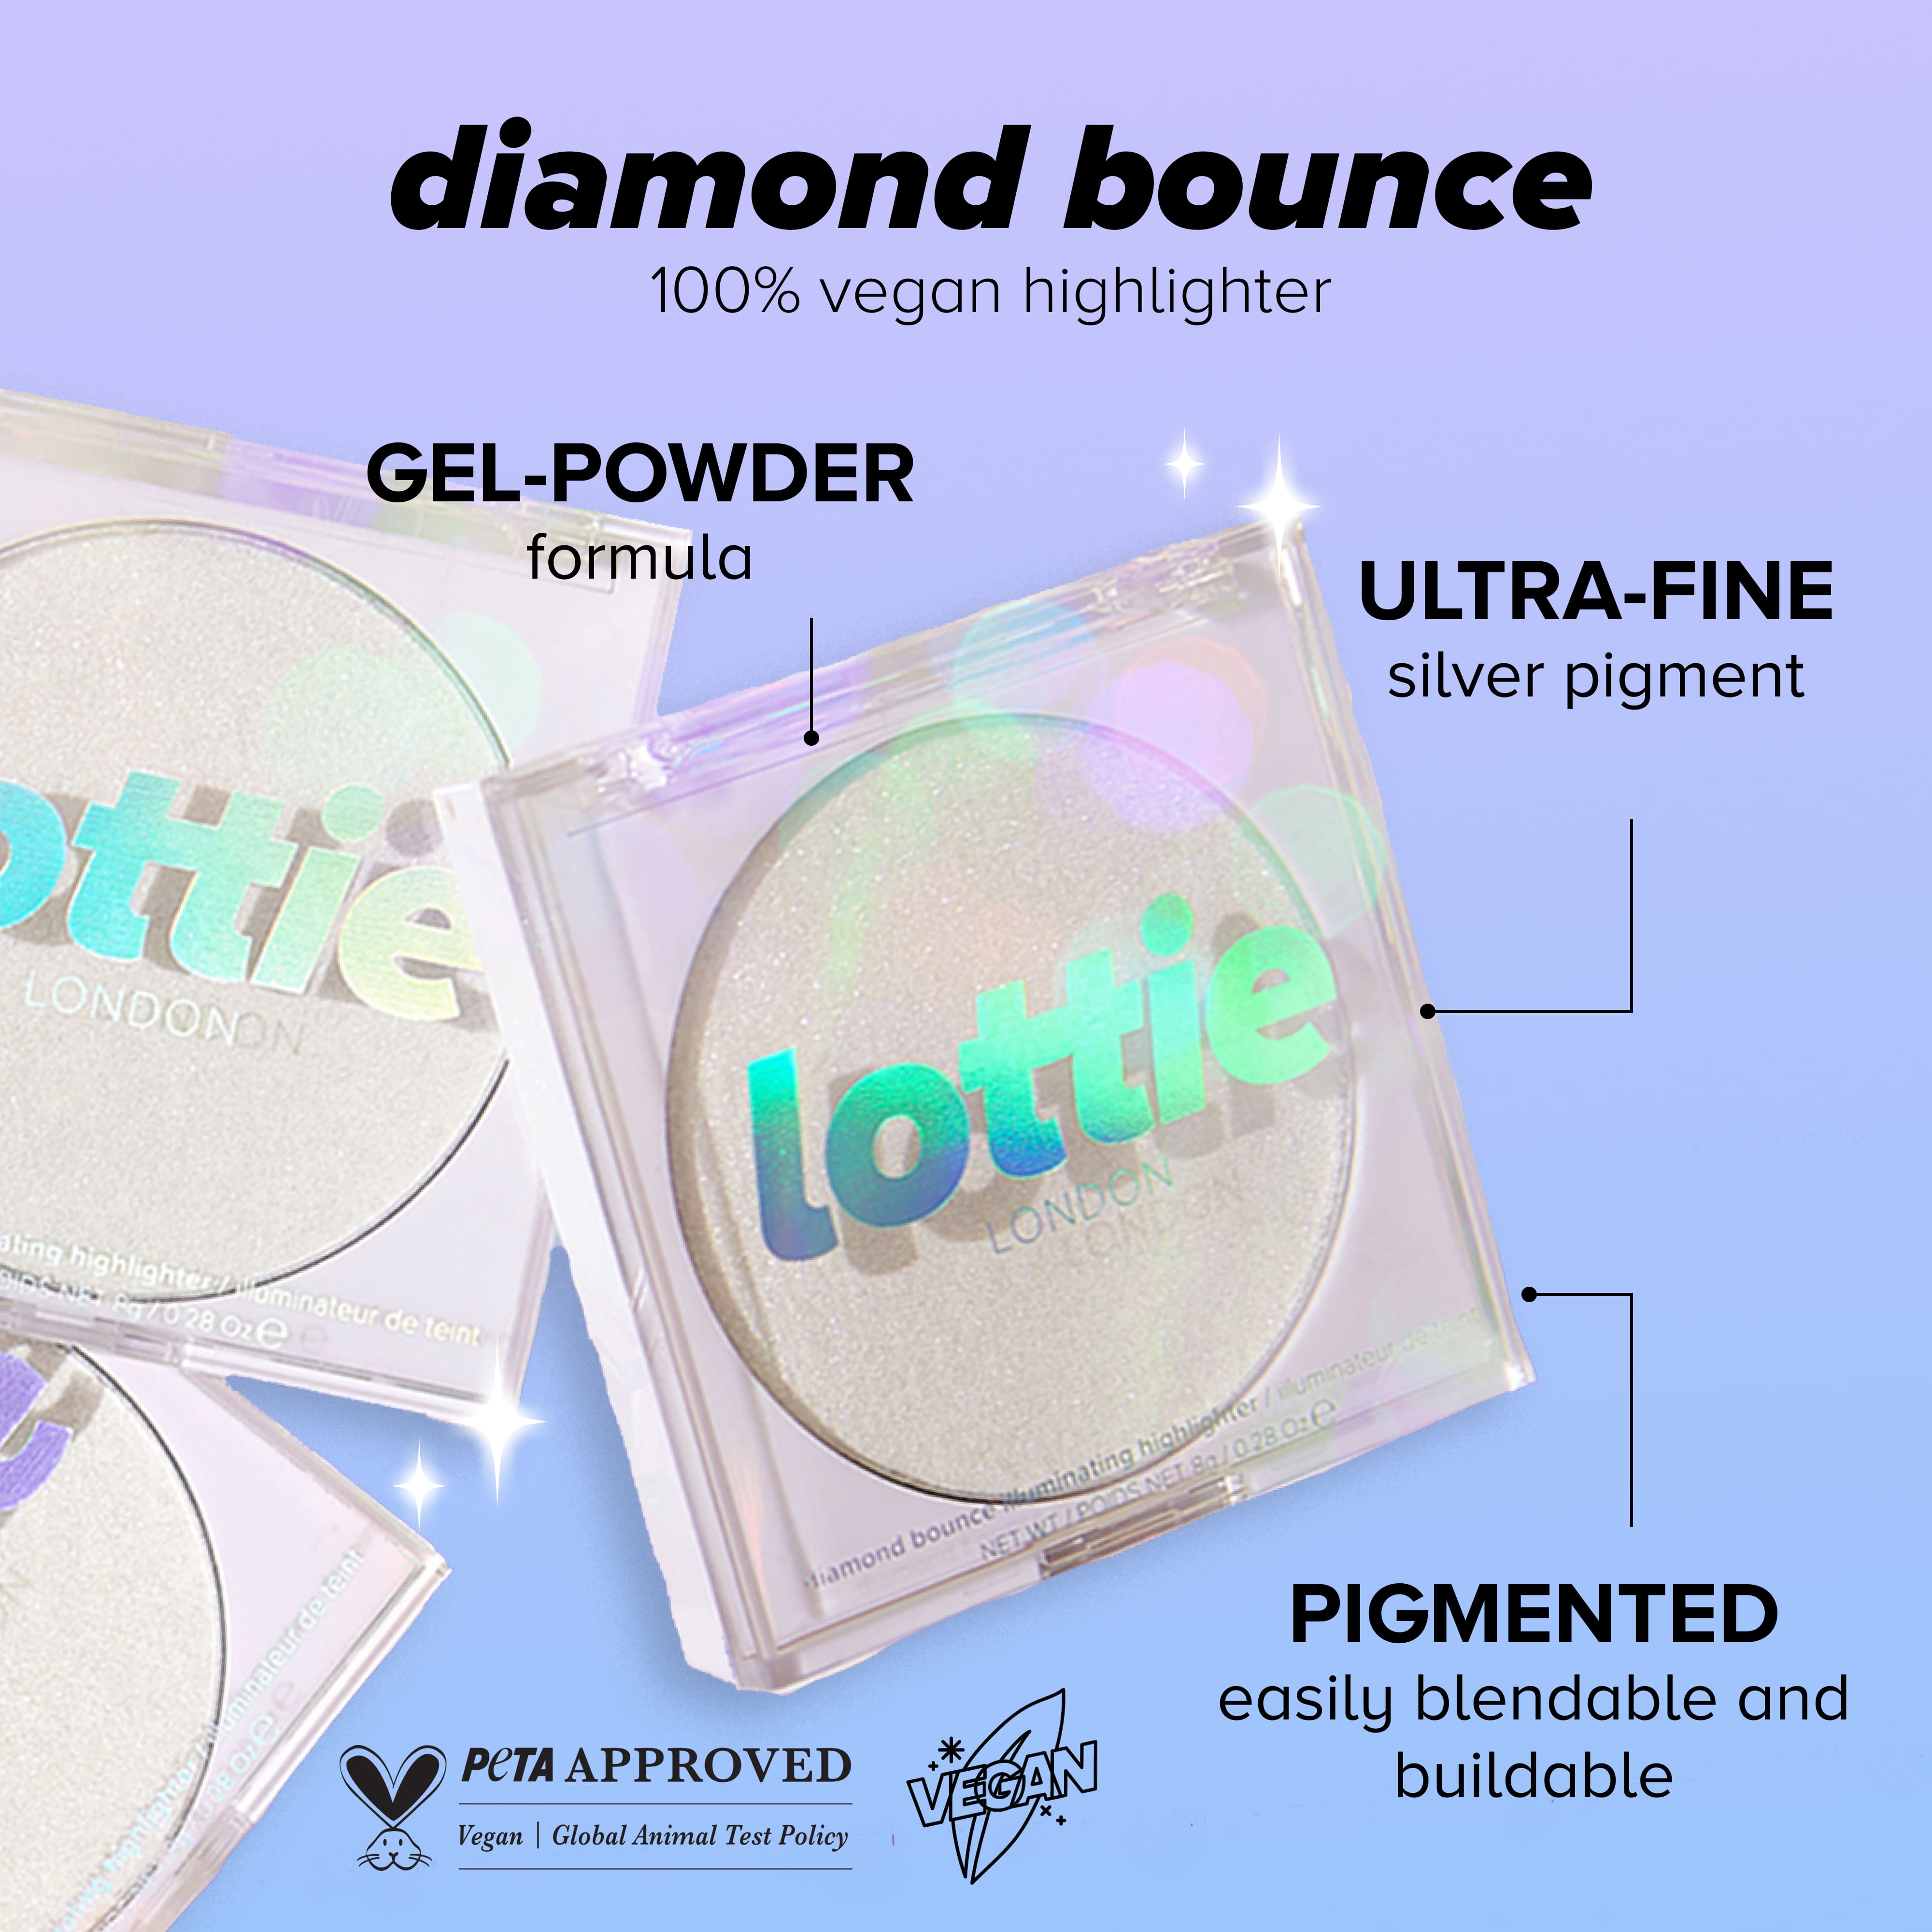 diamond bounce highlighter